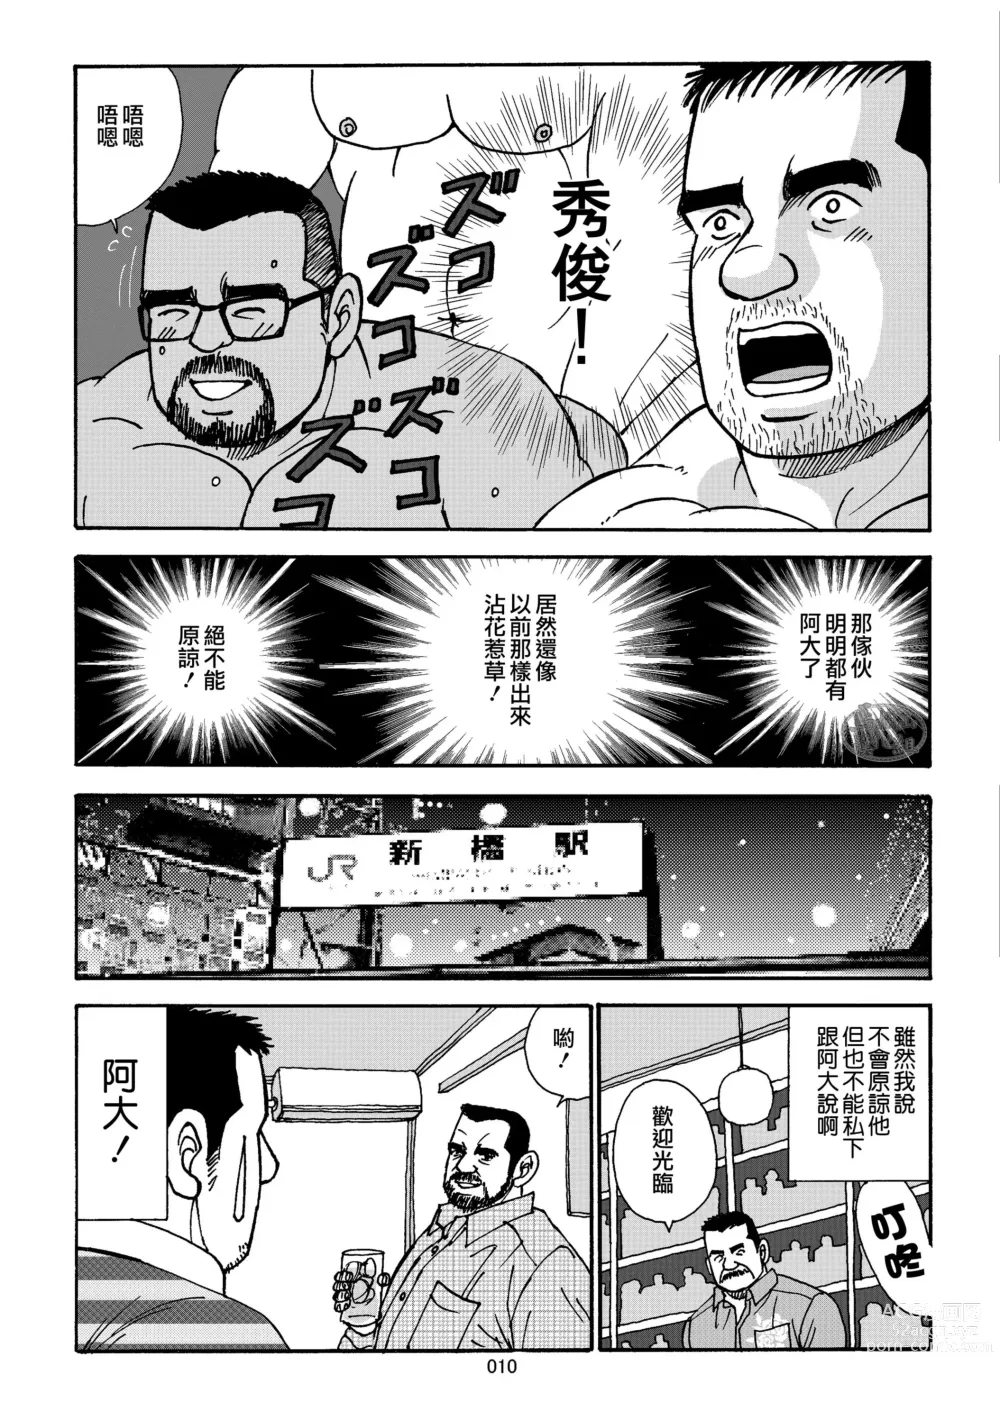 Page 10 of manga おいしい性活